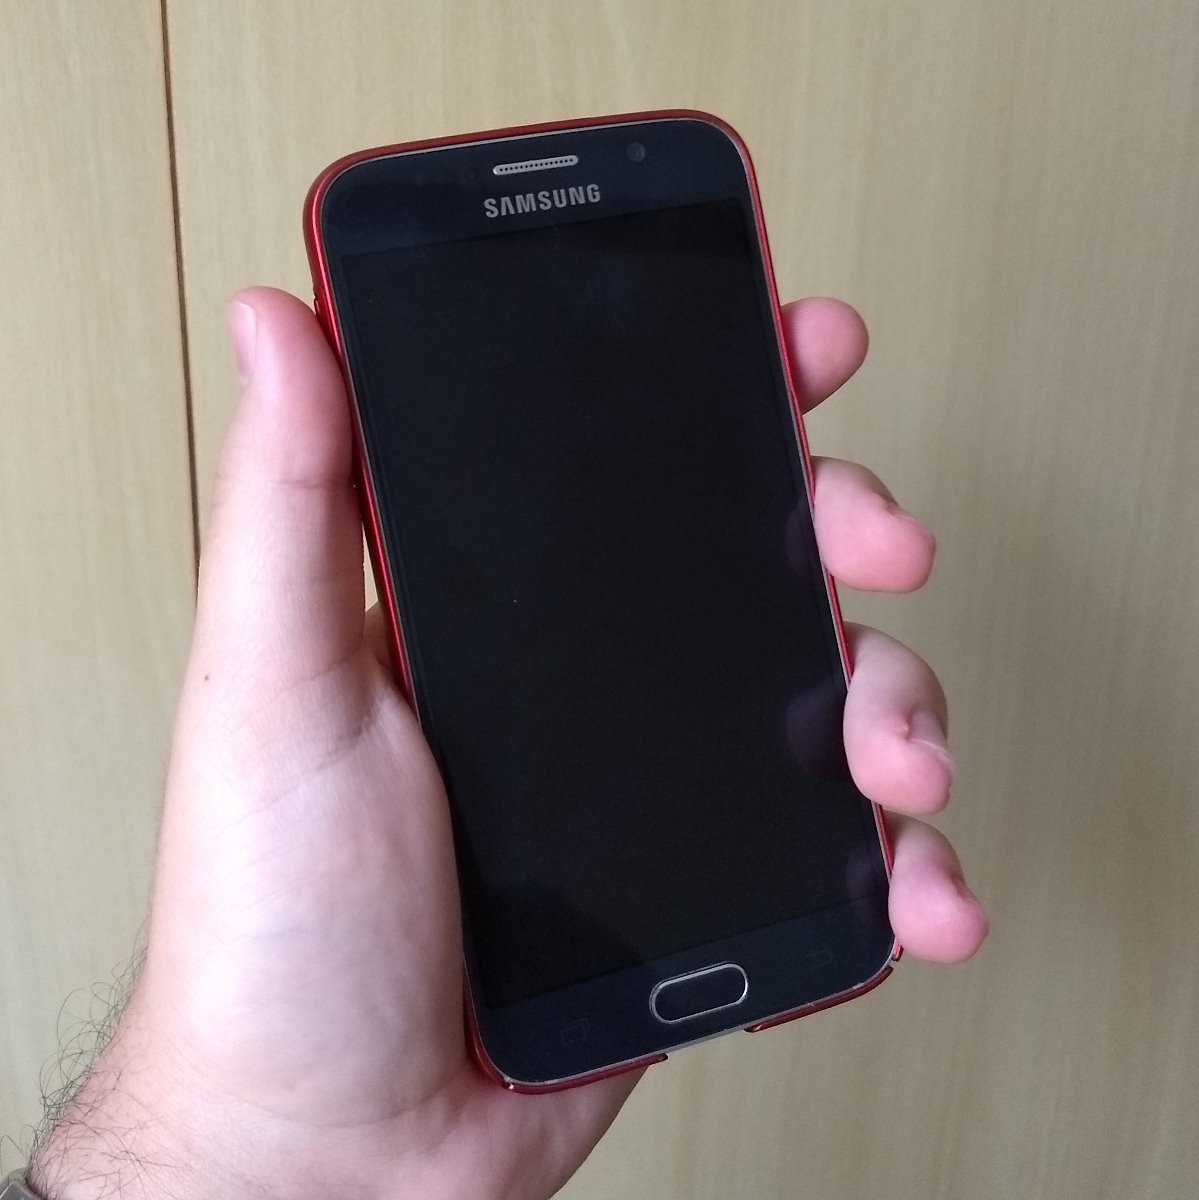 Samsung Galaxy S6 Flat Preto Anatel 32gb Excelente 4 Capas R 899